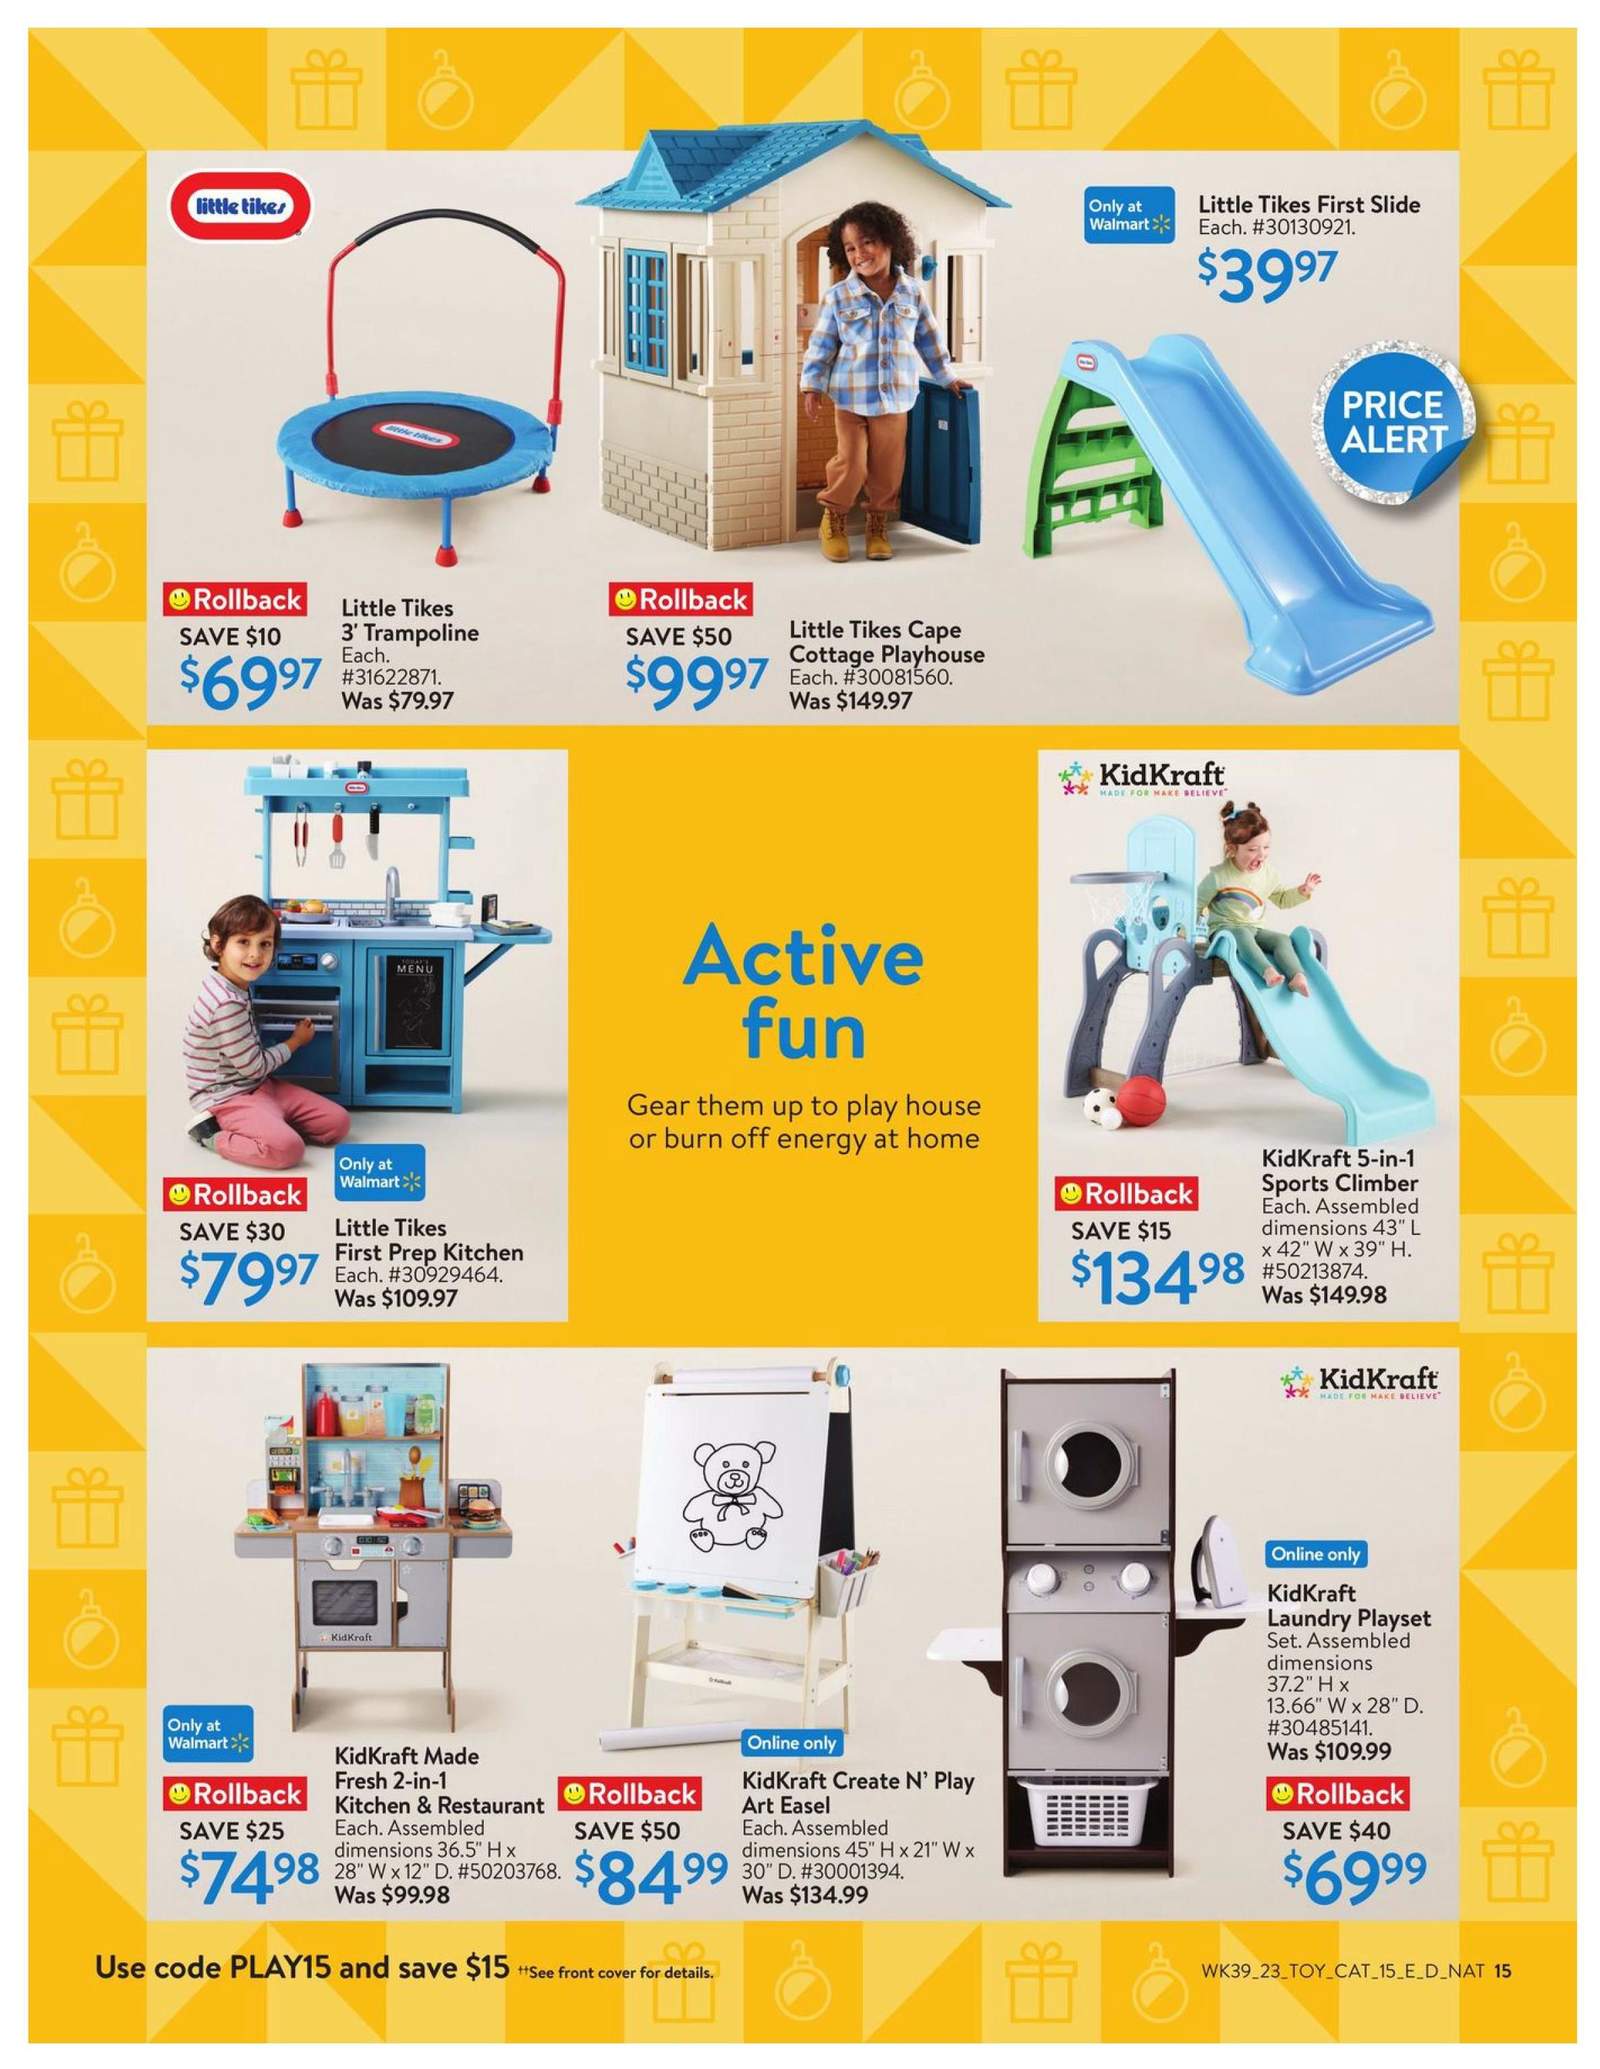 Walmart Toy Shop Flyer October 19 to December 24